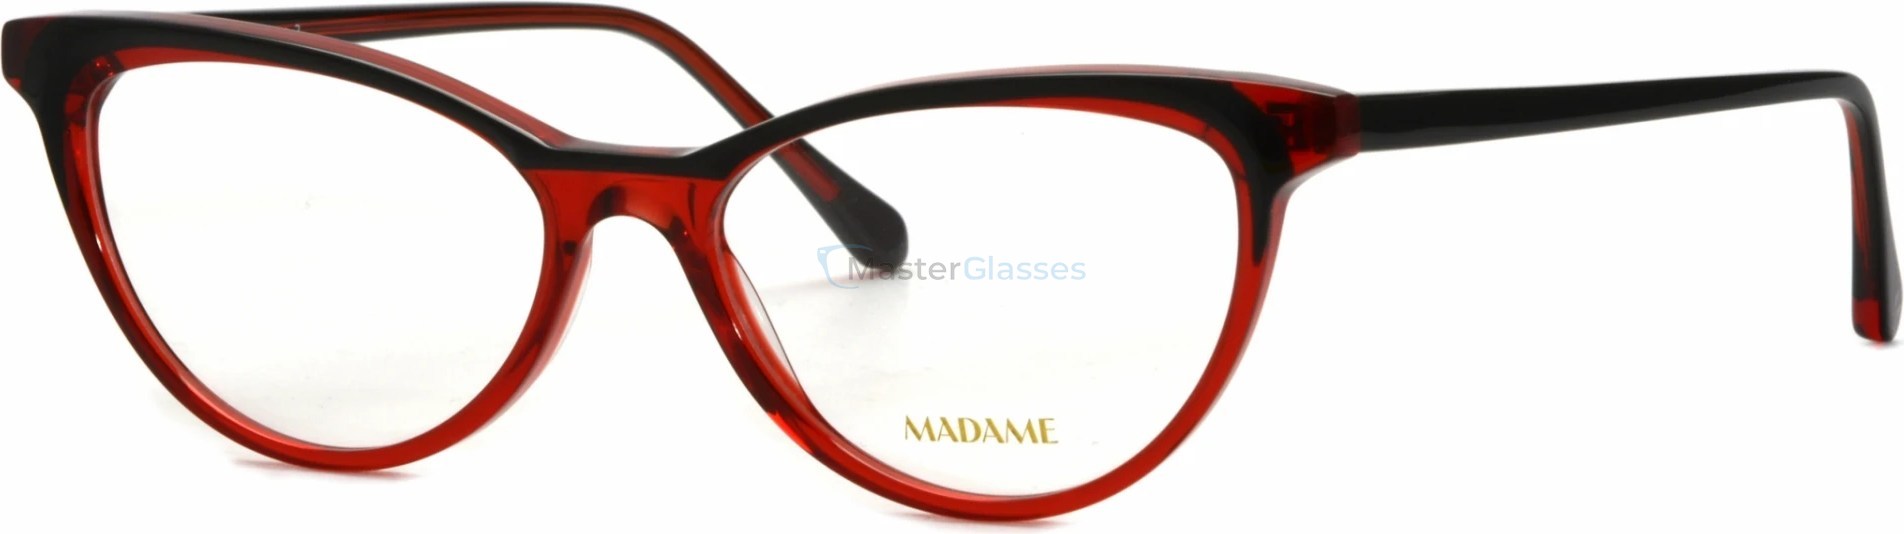  Madame 5011 02